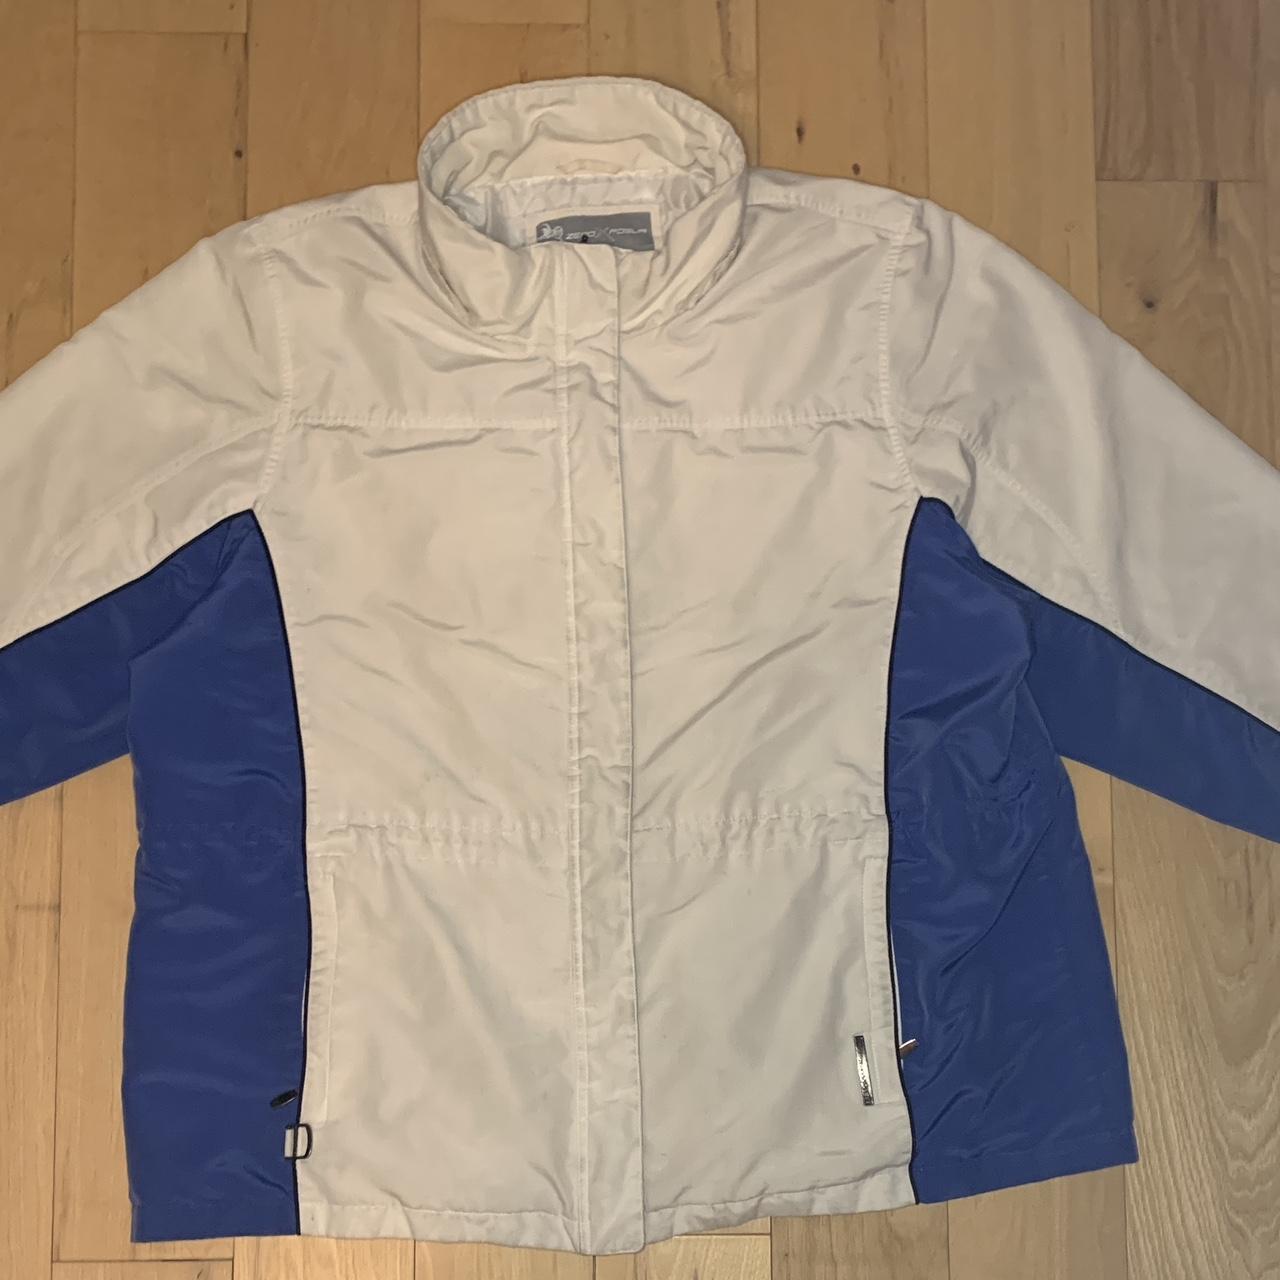 Zero x posur jacket White and blue Men’s XL vintage - Depop